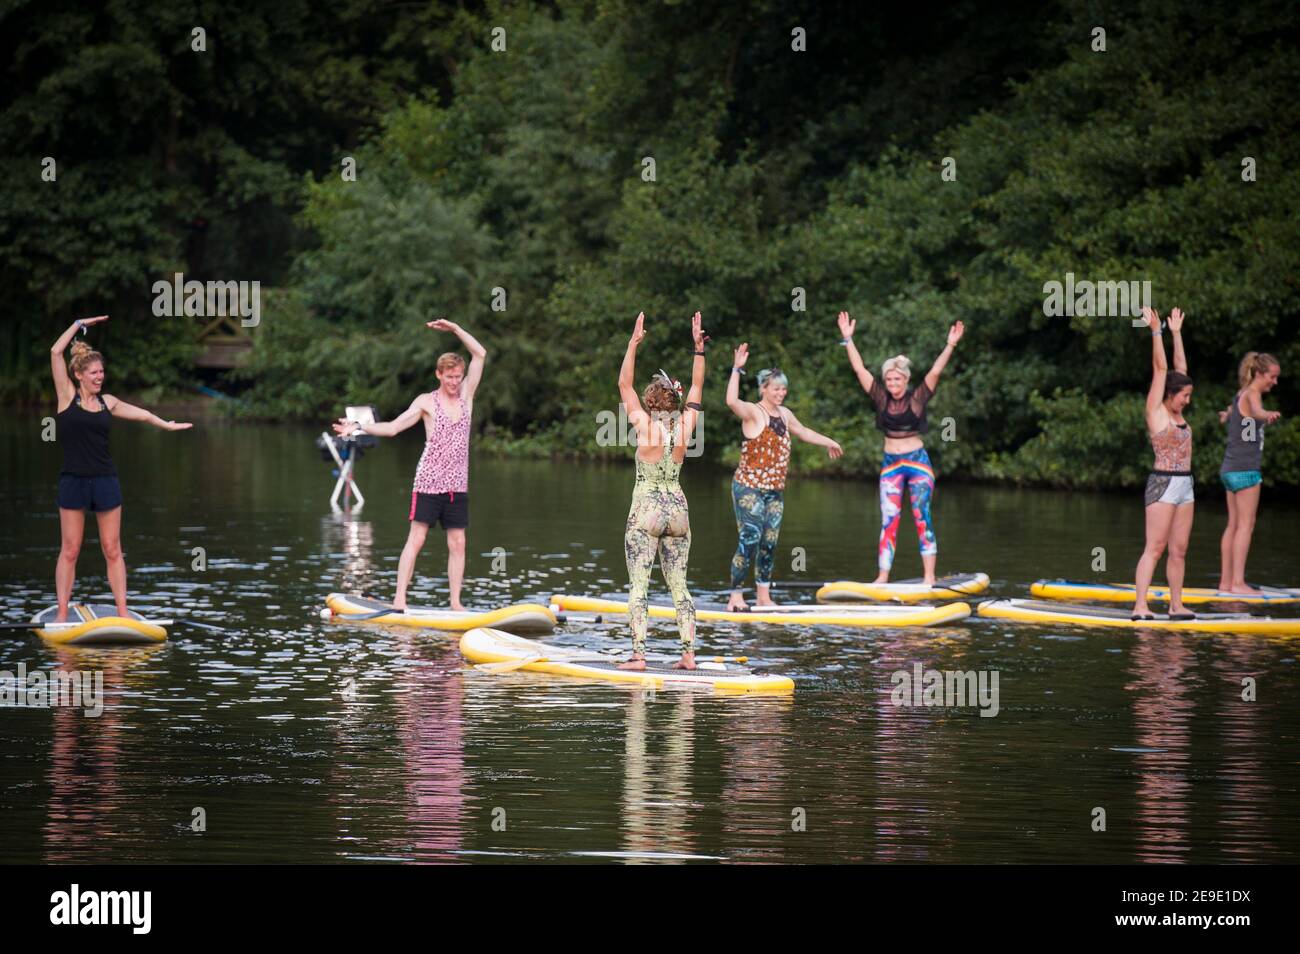 Paddle board Yoga on a lake at Shambala Festival, Kelmarsh, Nothamptonshire, UK Stock Photo